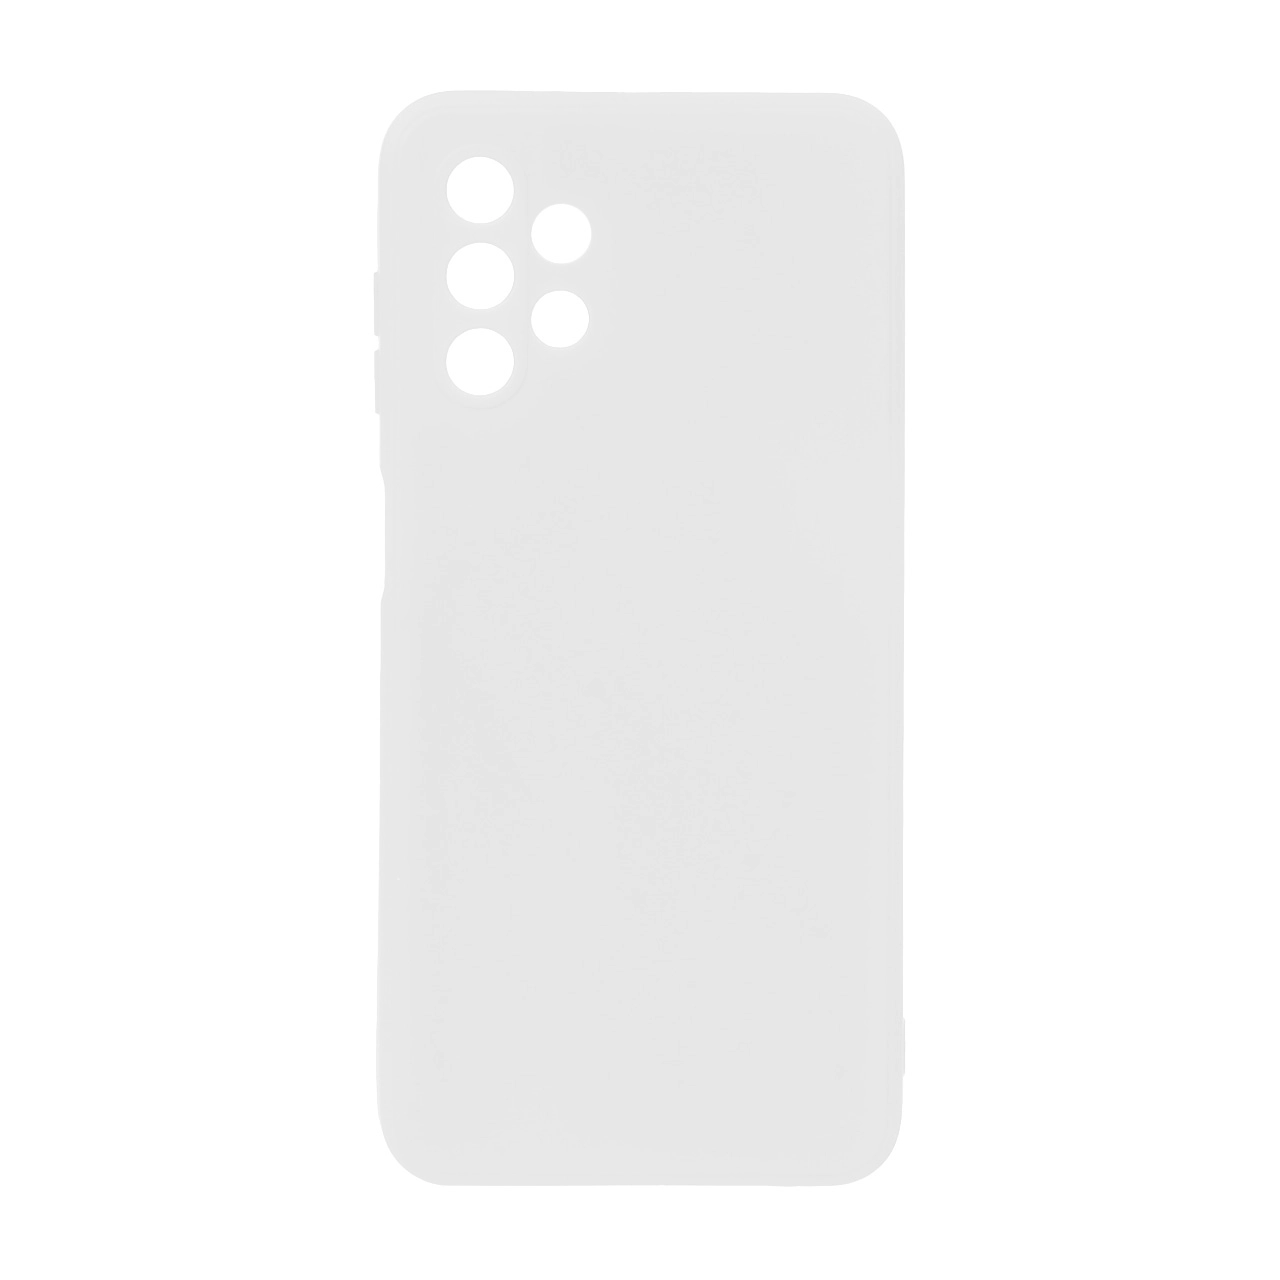 قاب سیلیکون اورجینال   مناسب SAMSUNG A13 4G – سفید